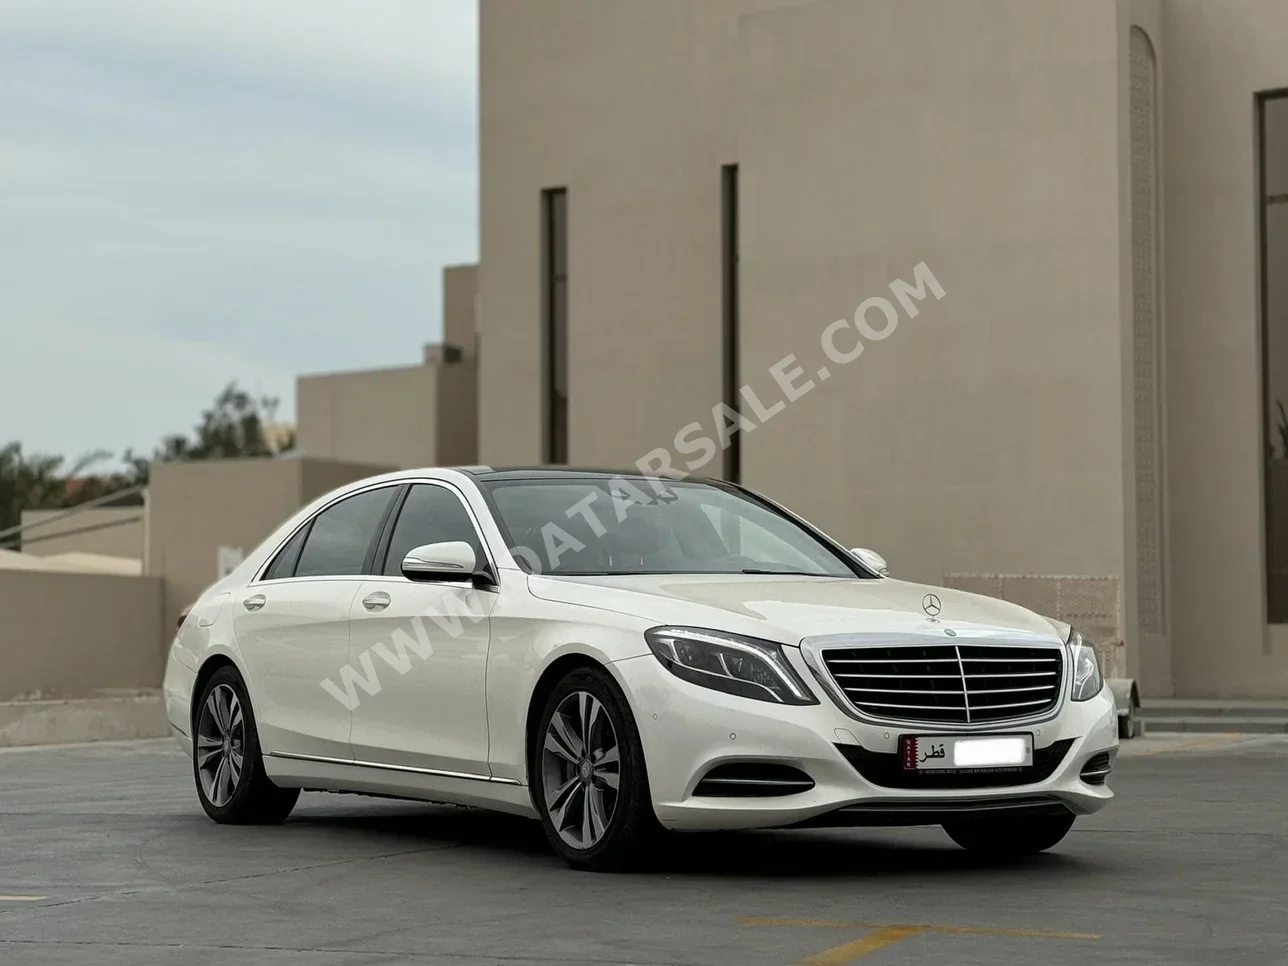 Mercedes-Benz  S-Class  400  2015  Automatic  66,000 Km  6 Cylinder  Rear Wheel Drive (RWD)  Sedan  White